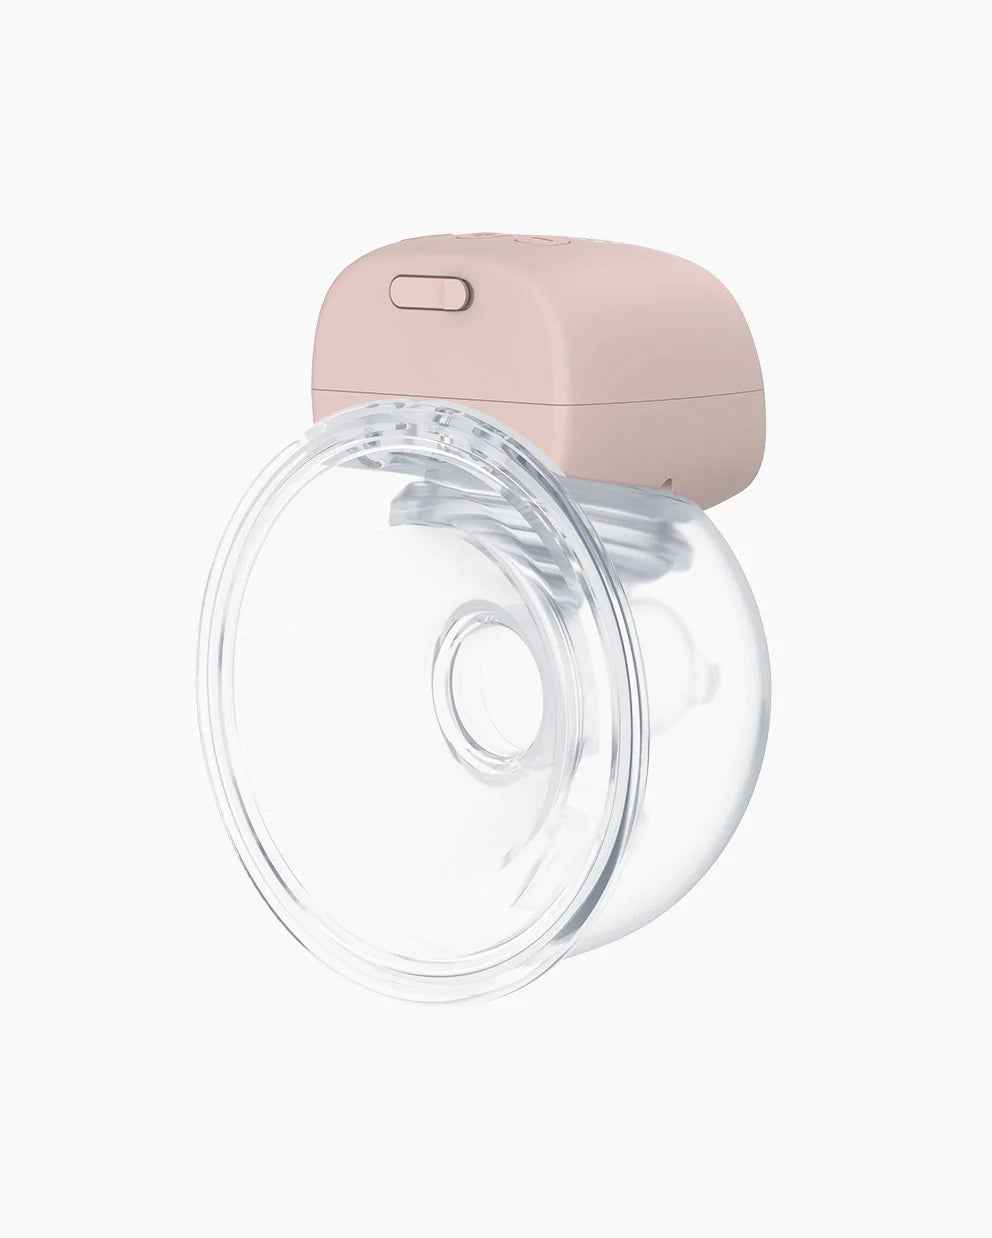 S9 Pro Bra Bundle: Double S9 Pro and Jelly Gel Bra for Breastfeeding